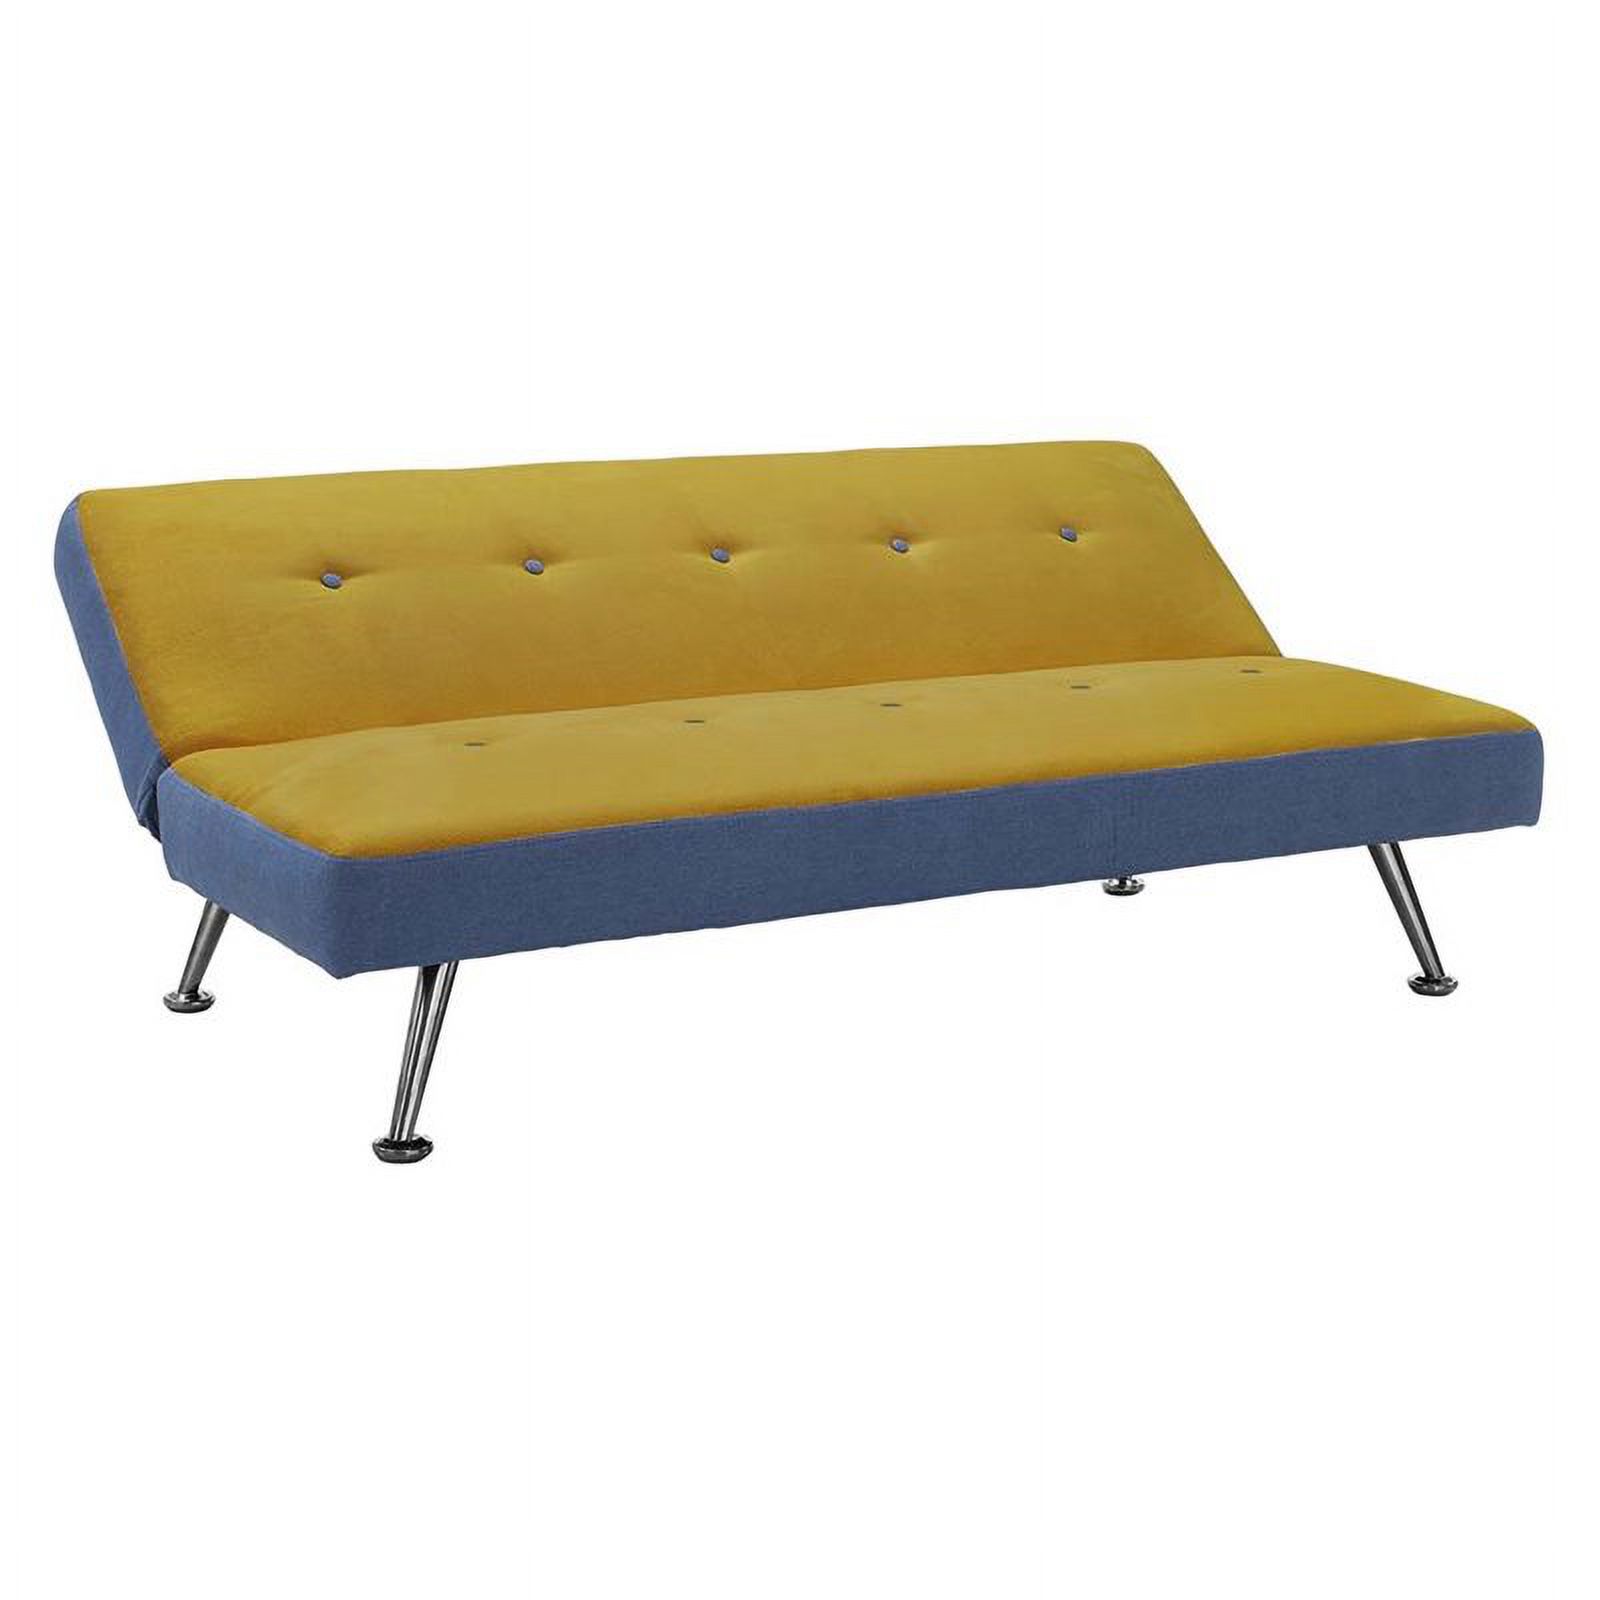 DHP Junior Microfiber Convertible Sofa in Denim and Minion Yellow - image 3 of 9